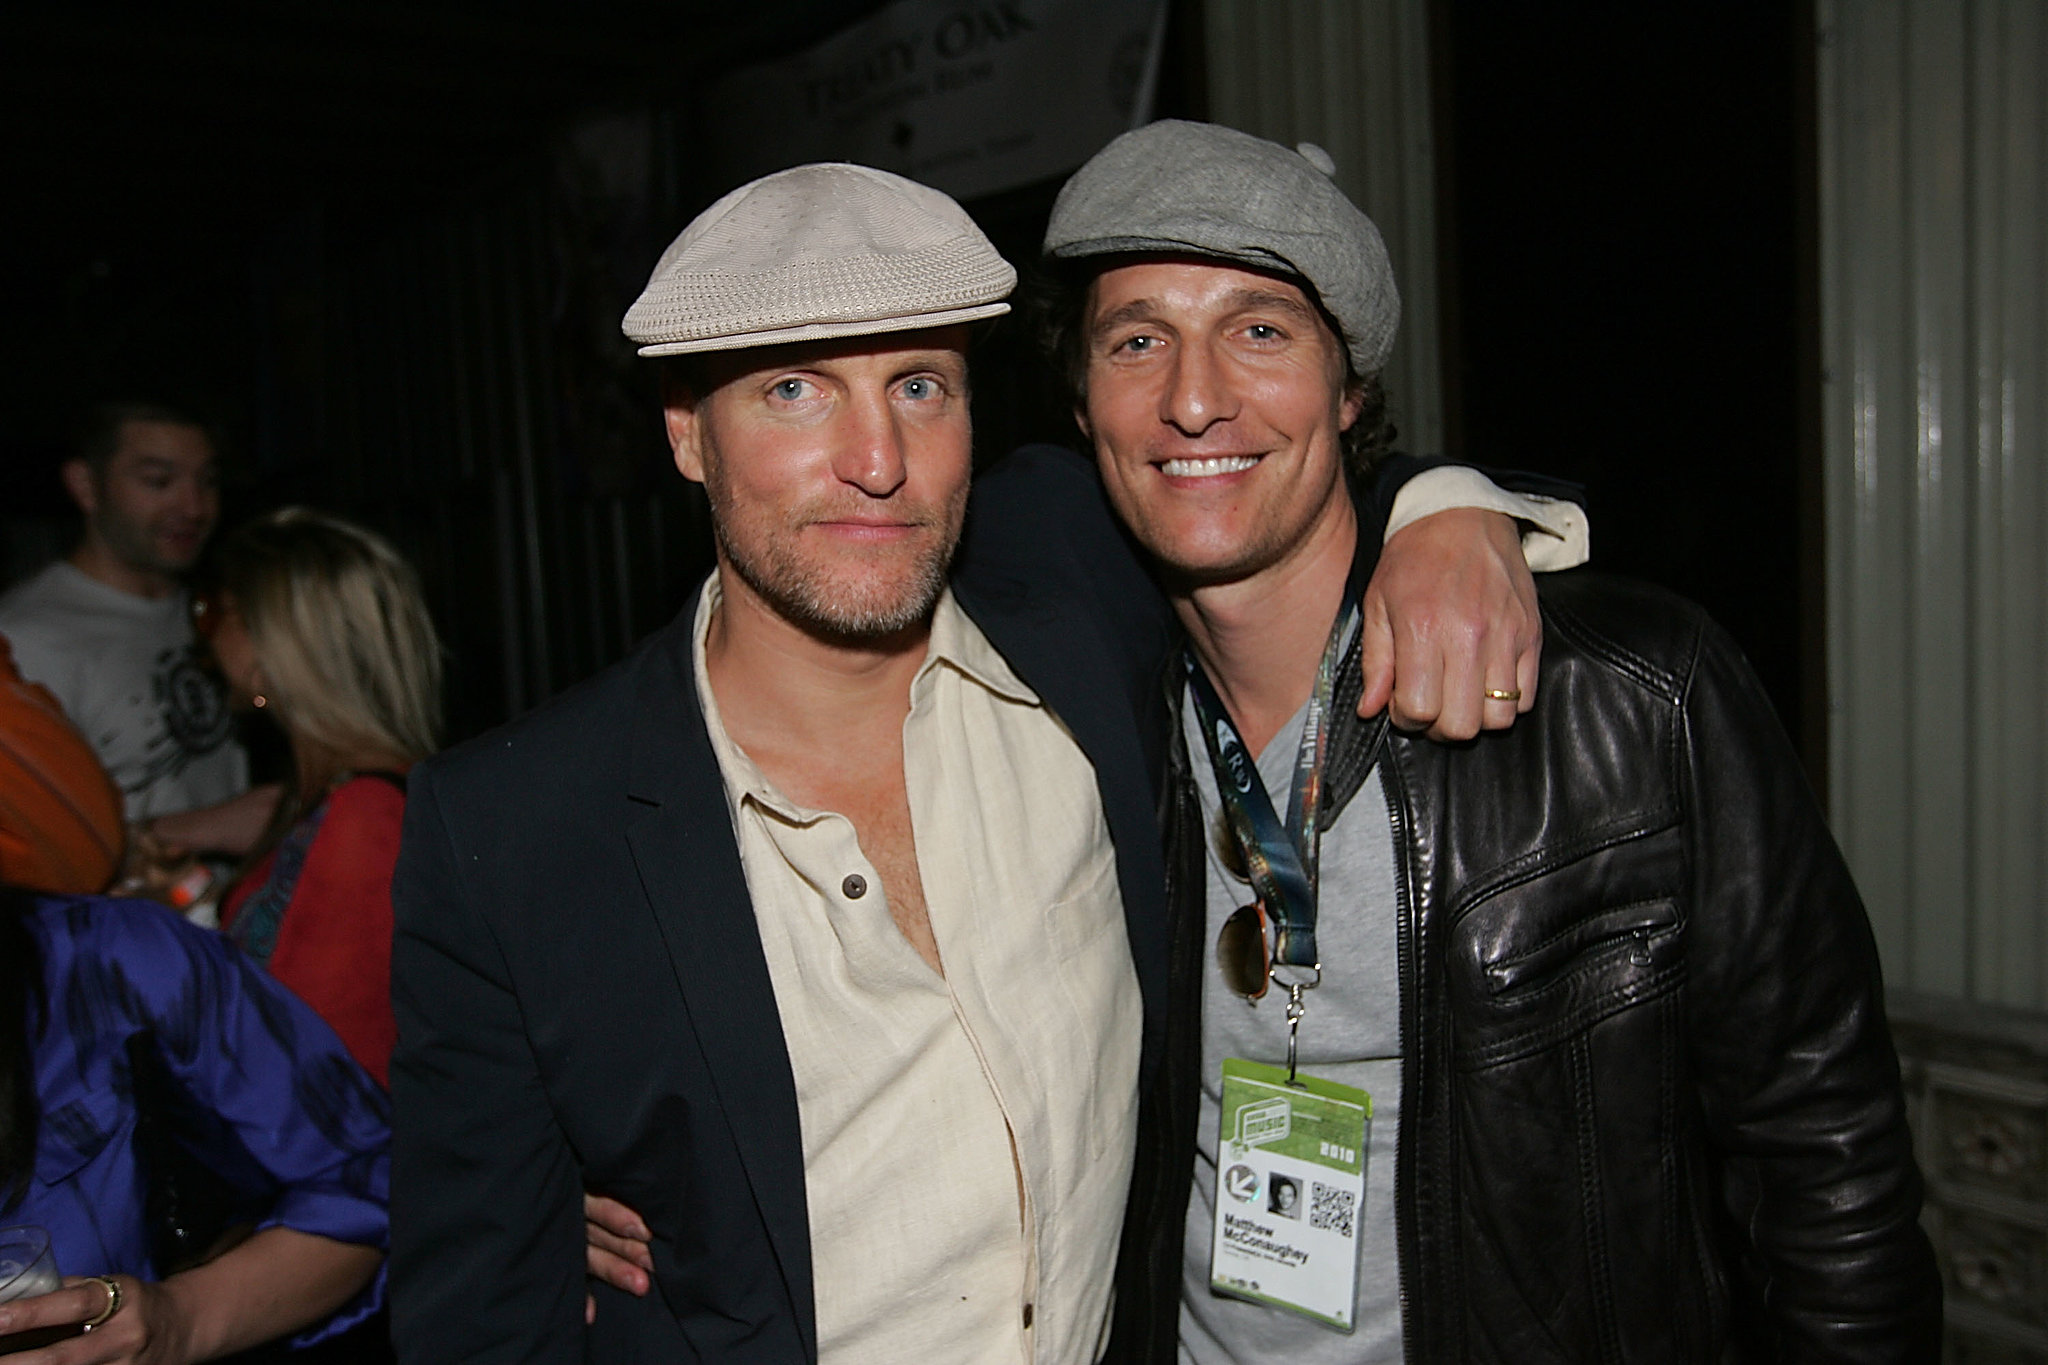 Woody-Harrelson-Matthew-McConaughey-have-been-longtime-friends.jpg